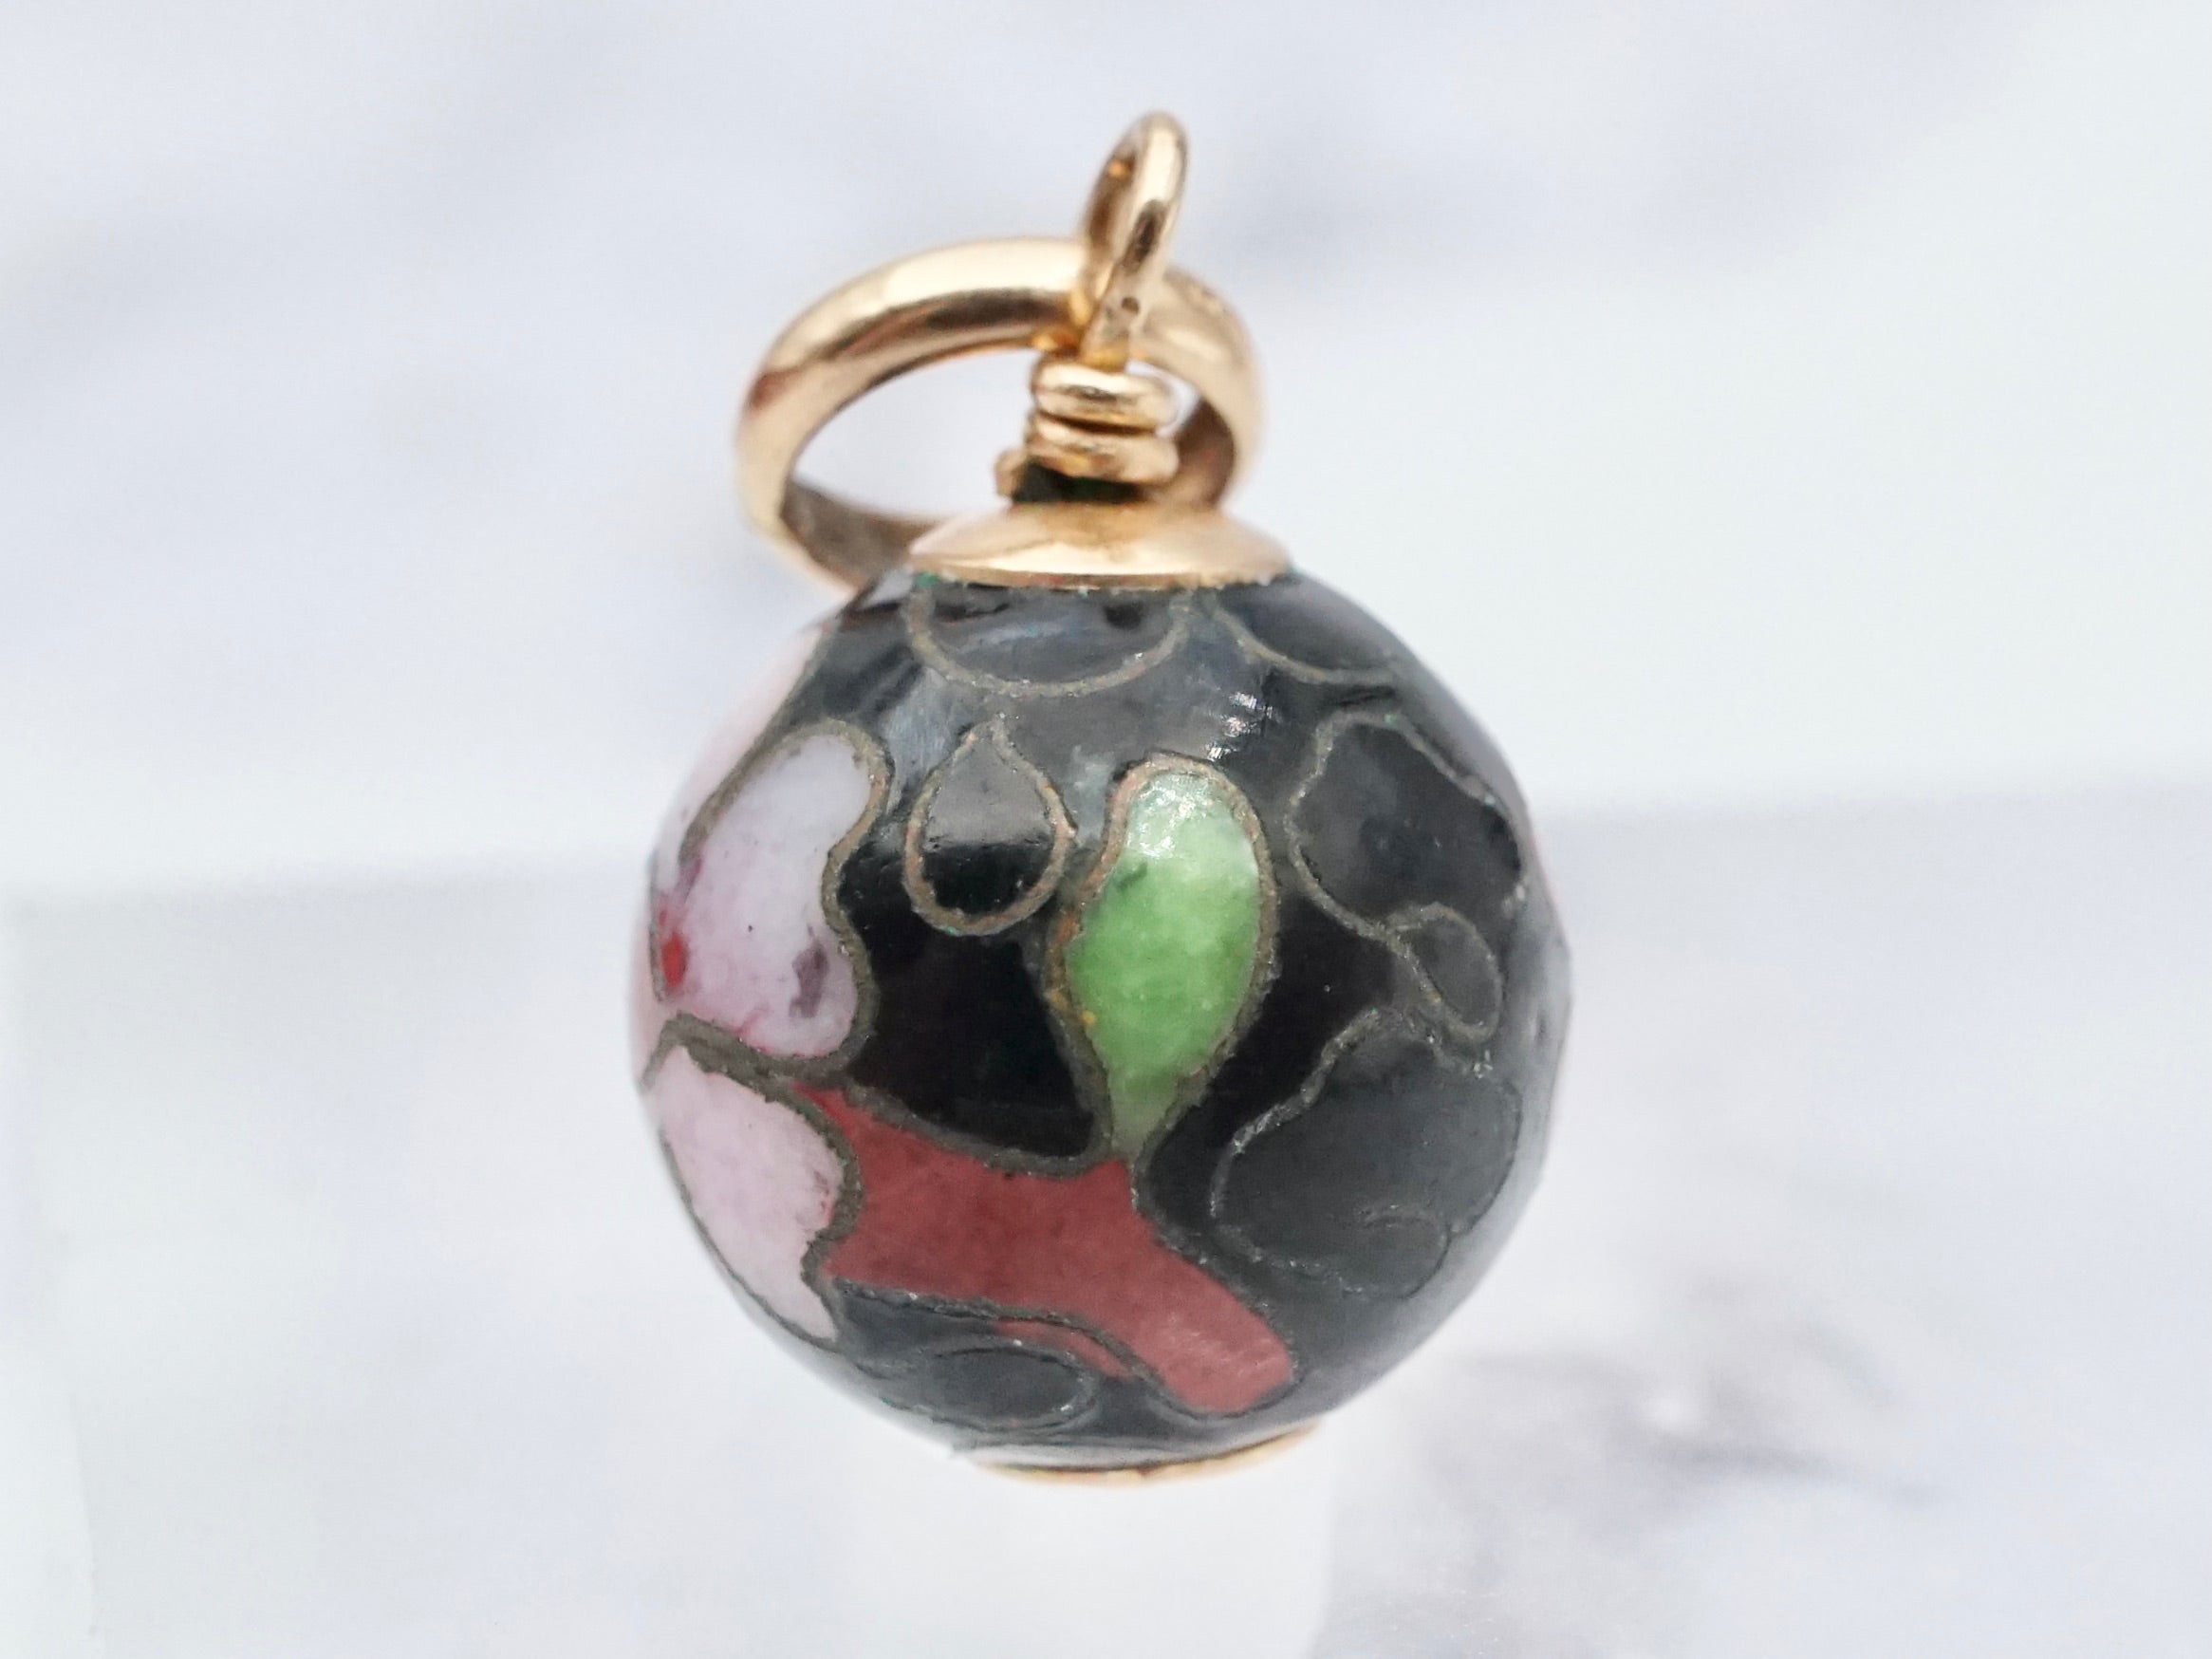 Vintage 14k gold and black cloisonne enamel bead pendant